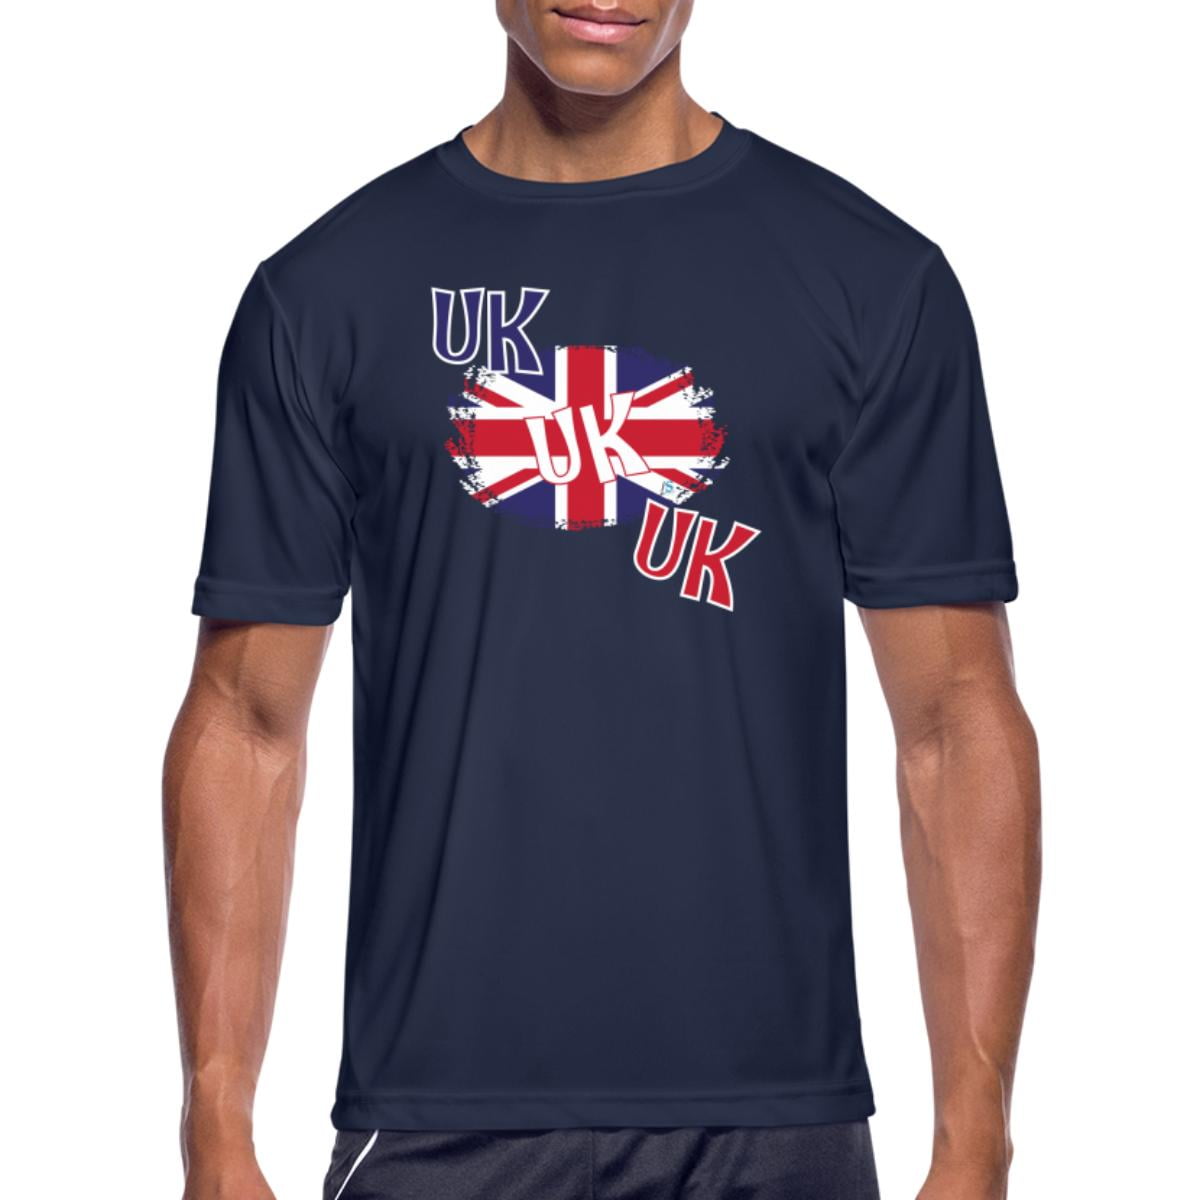 Uk 3 Men's Moisture Wicking Performance T-Shirt Outdoor Sport Tee ...